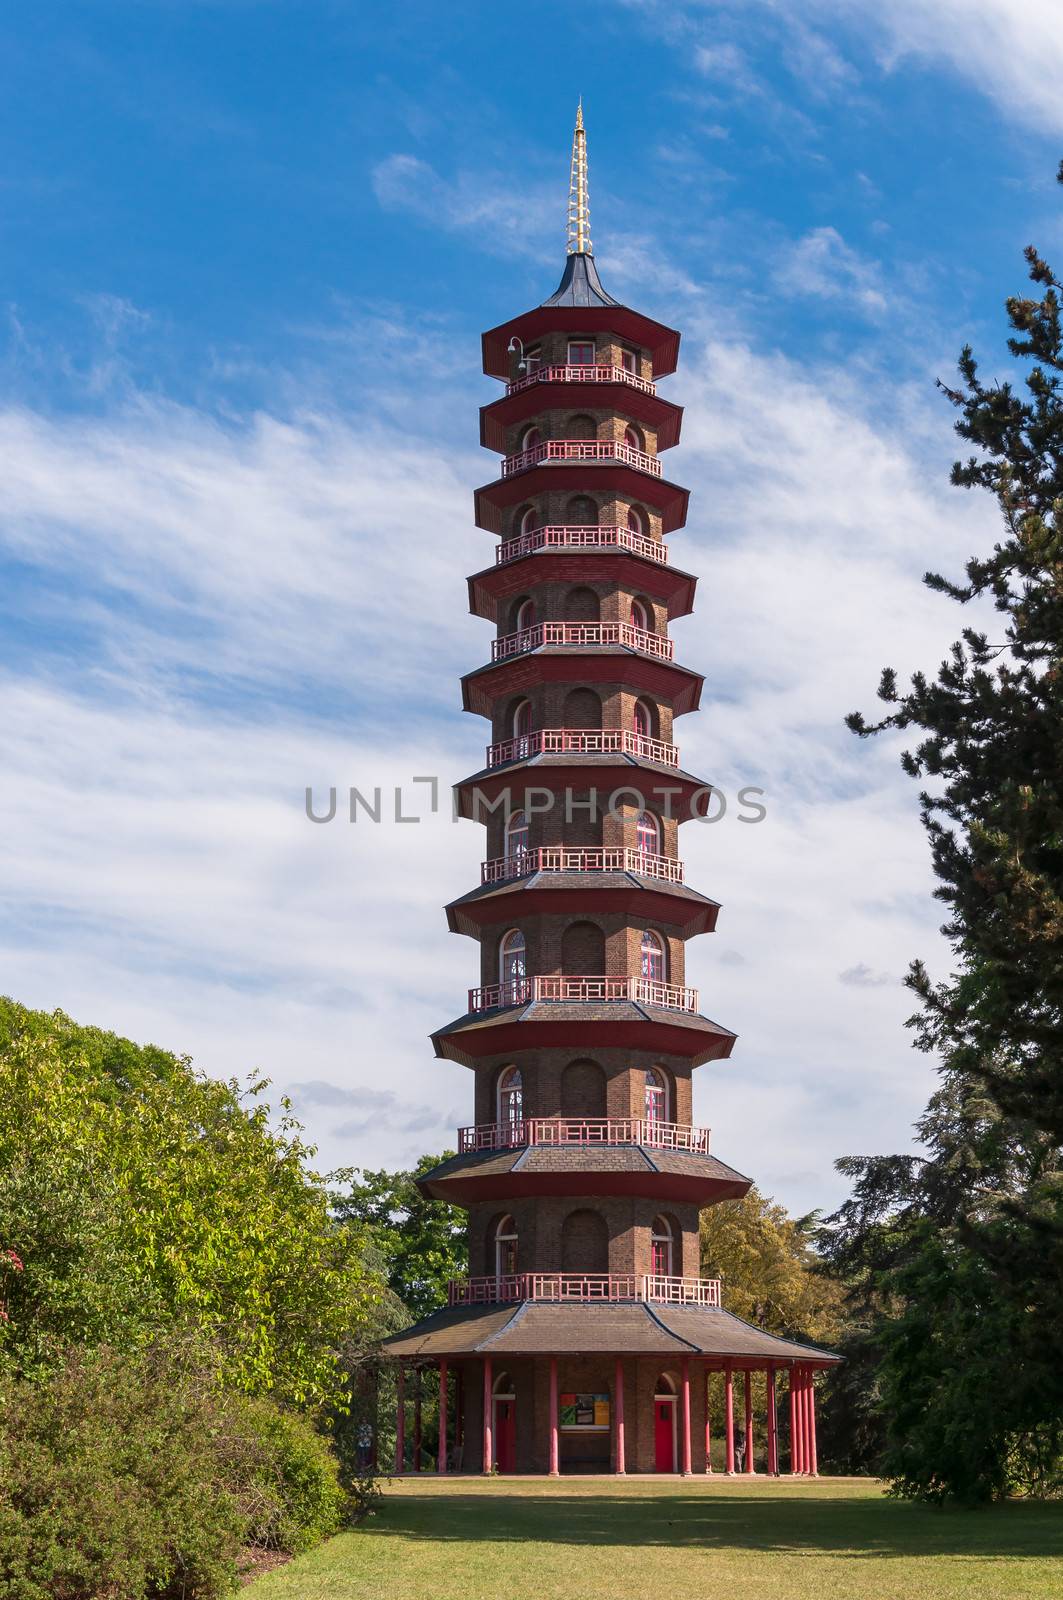 Pagoda tower in Kew Royal Botanic Gardens, London, England.